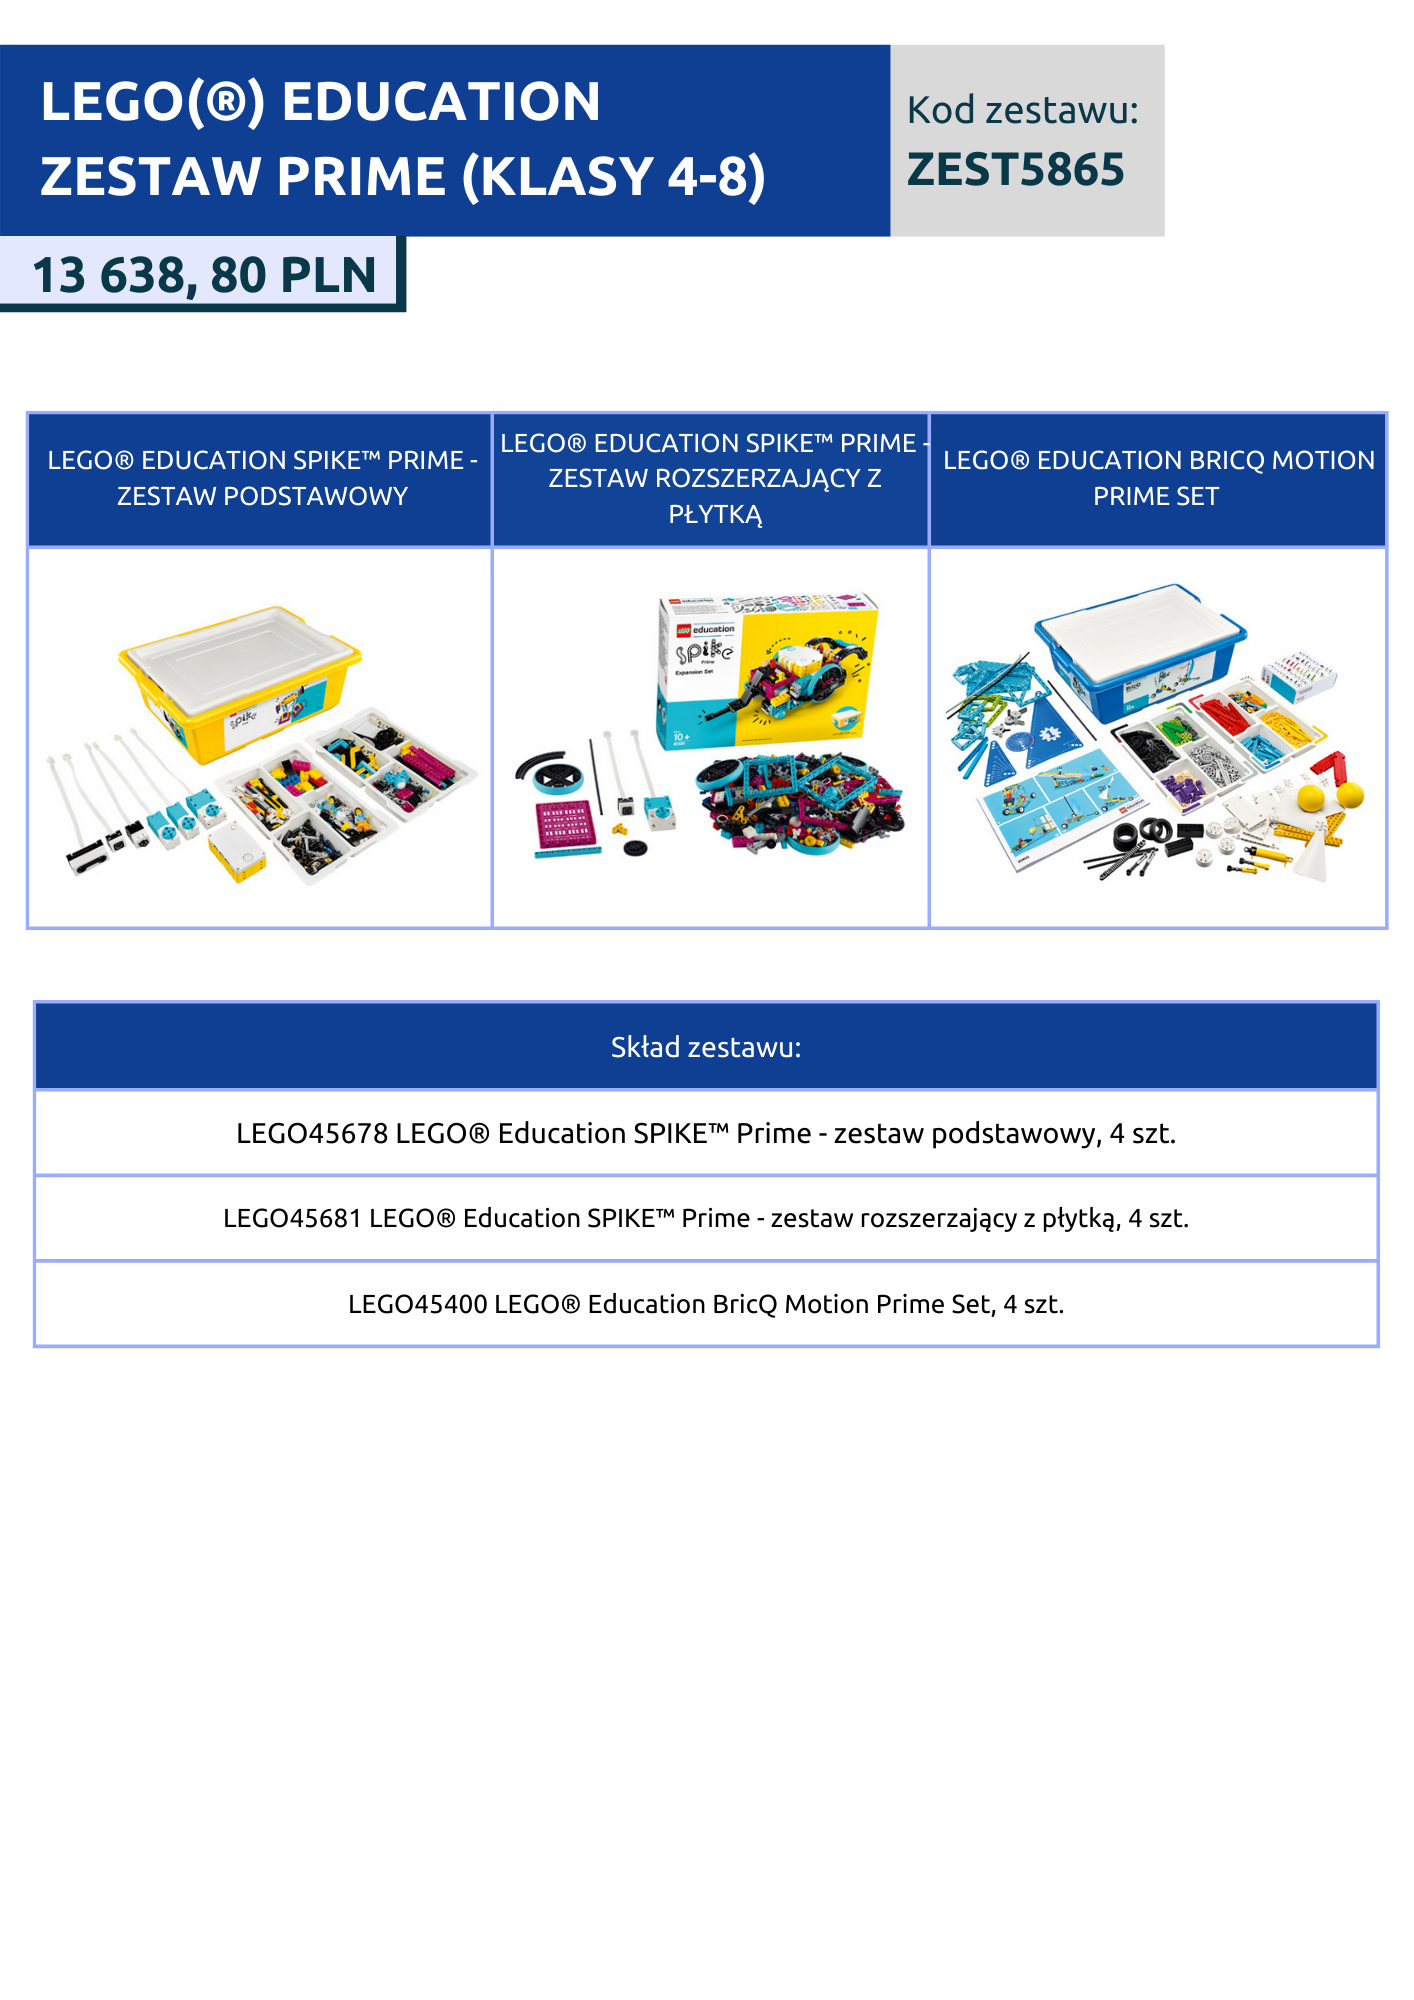 Zestaw Lego Education dla klas IV-VIII